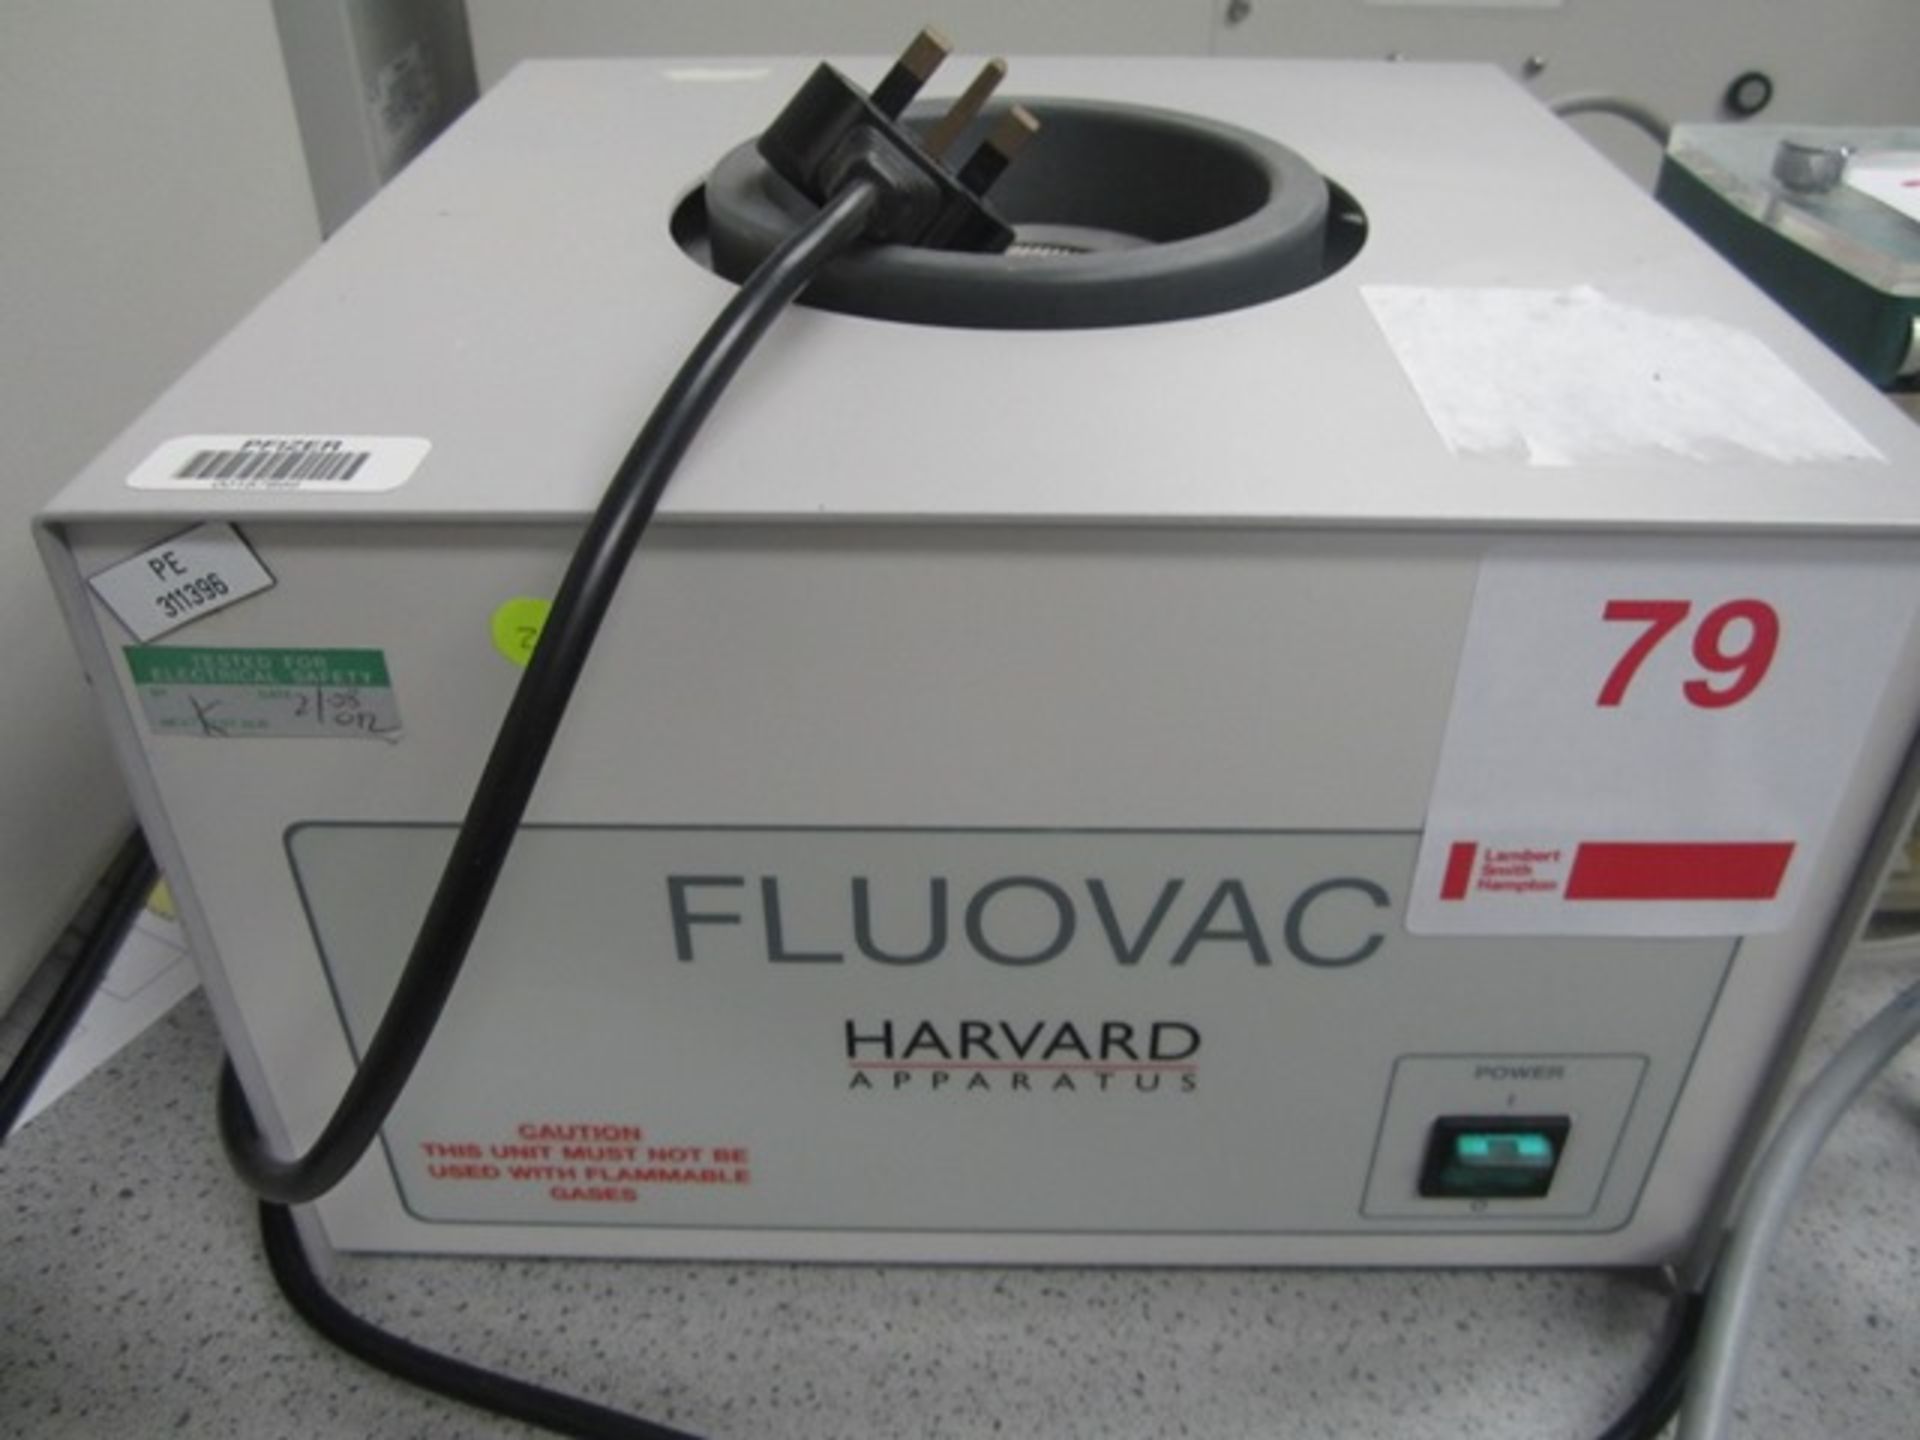 Harvard Apparatus Fluovac